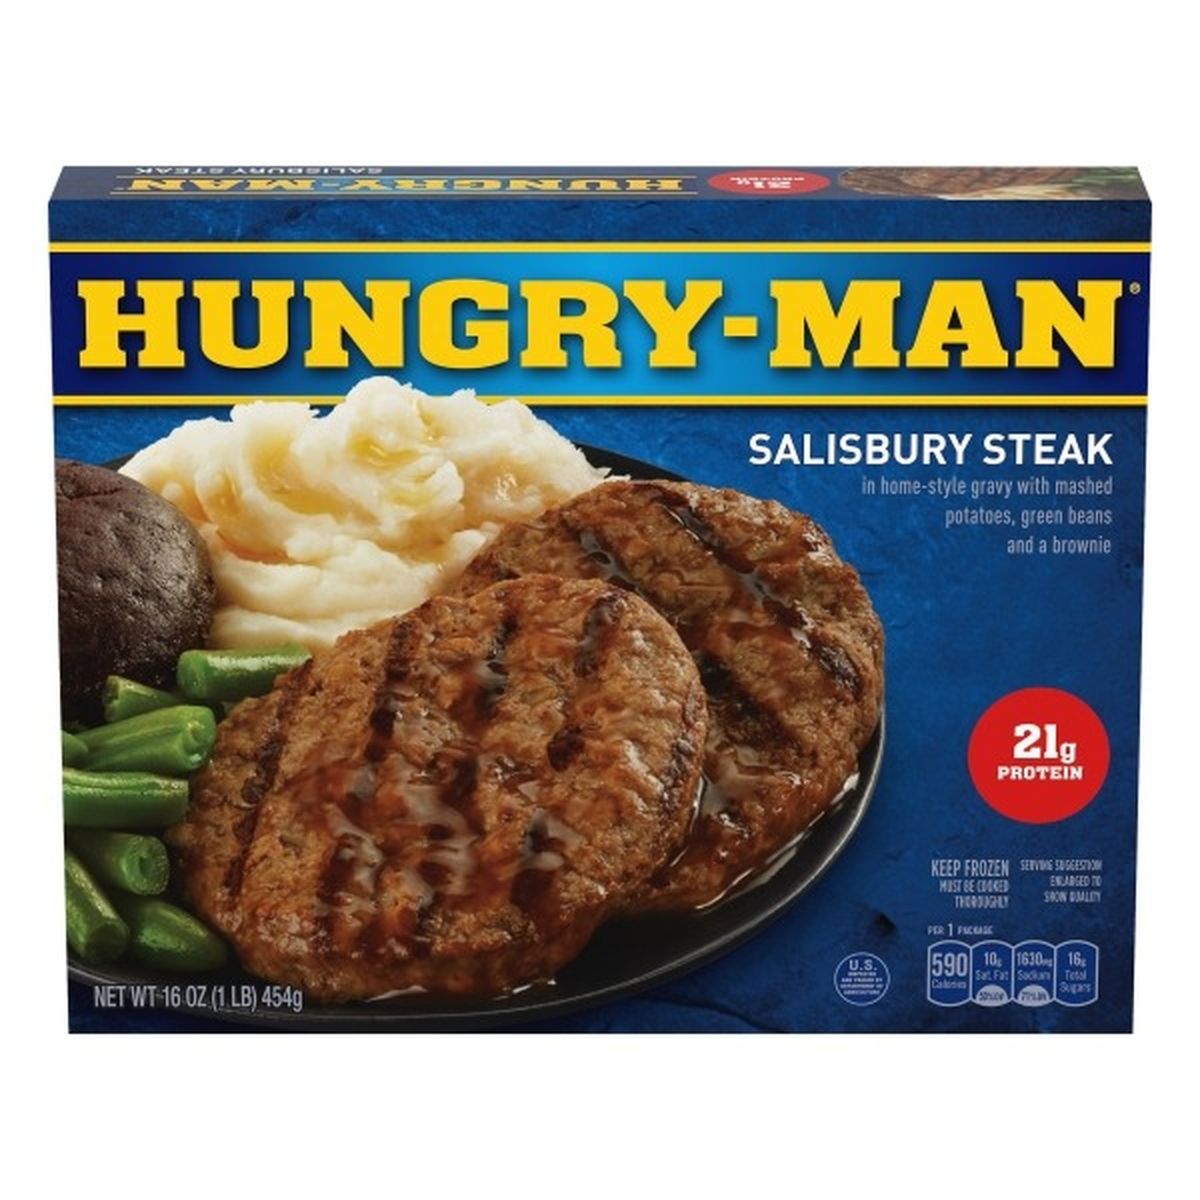 Calories in Hungry-Man Salisbury Steak